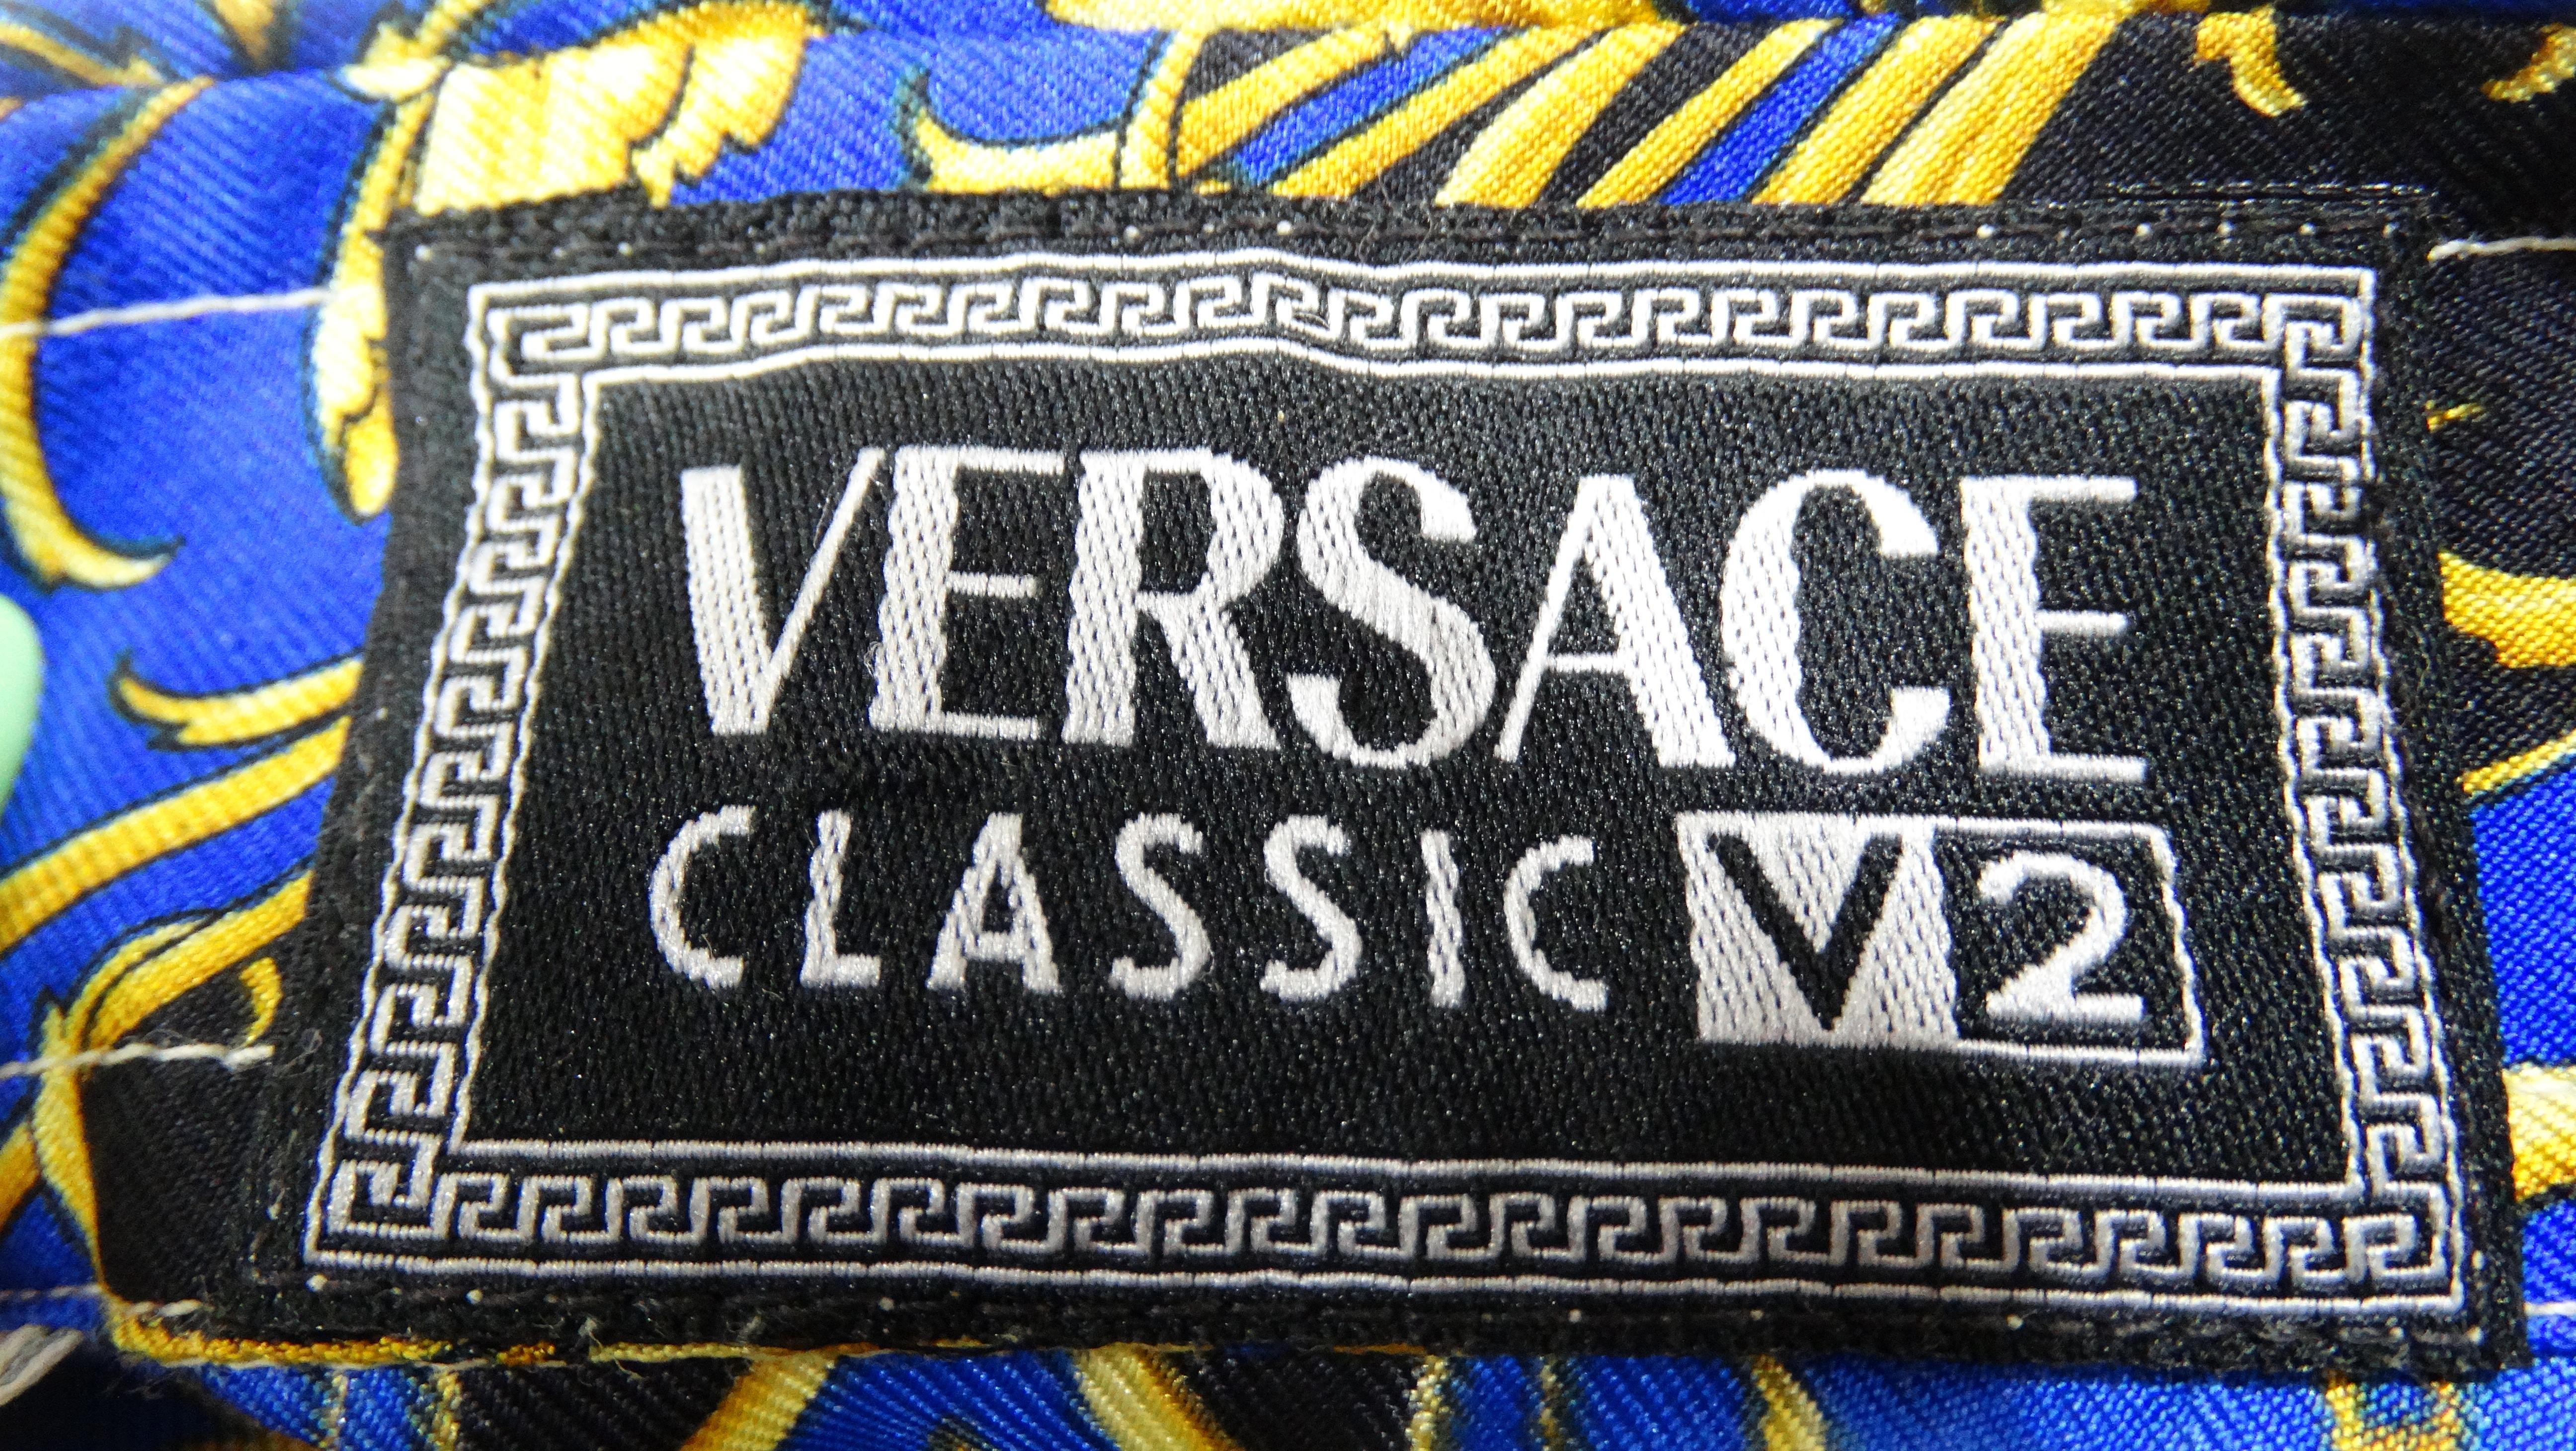 versace classic shirt